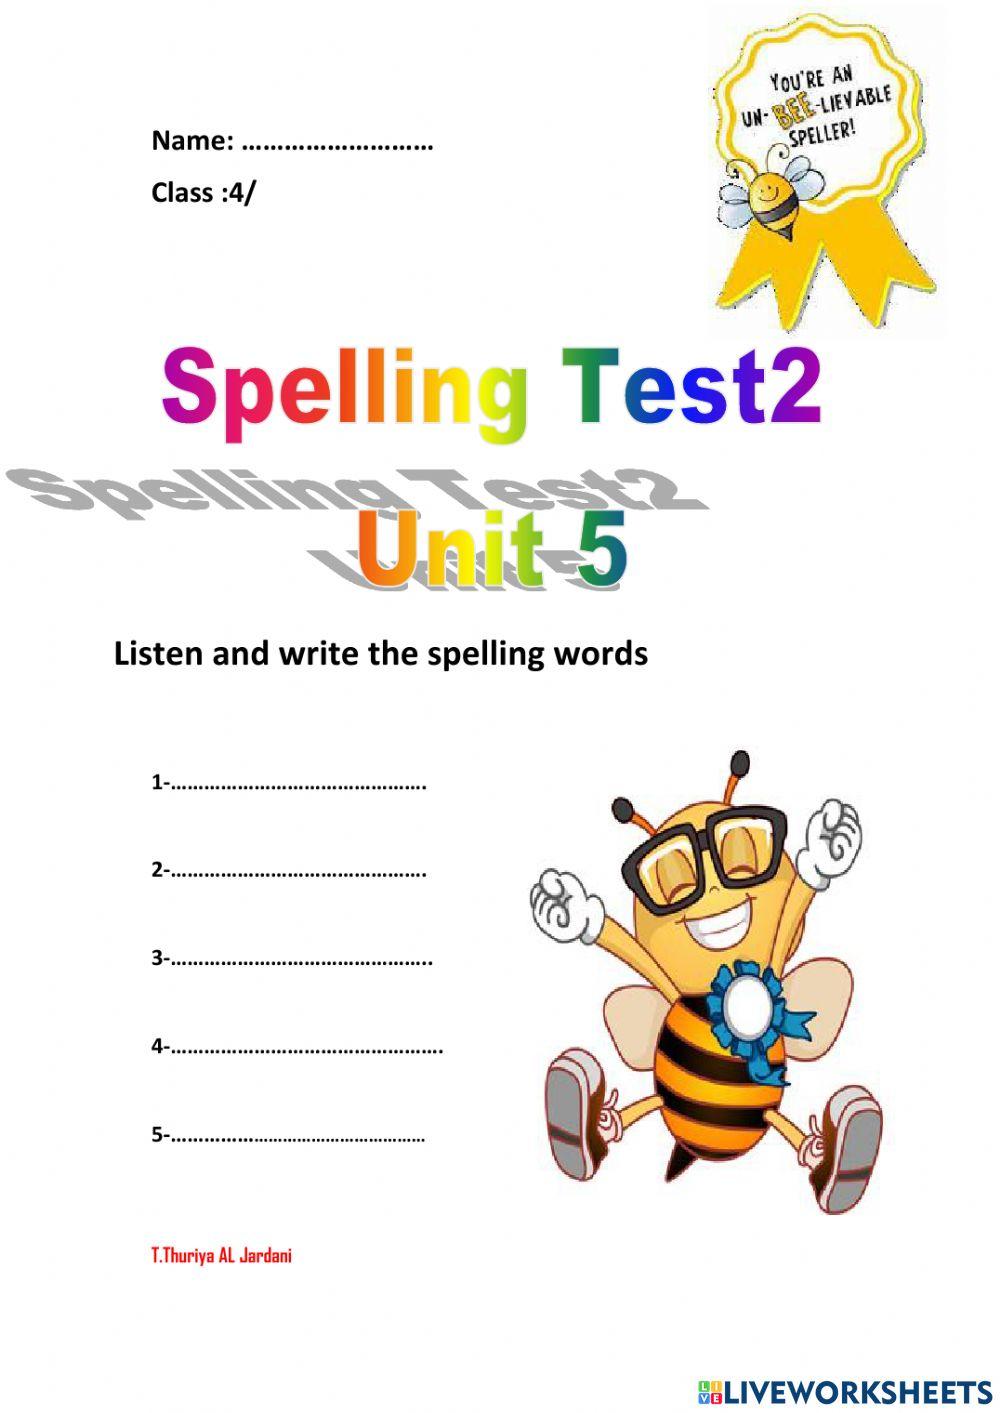 Spelling test 2u5